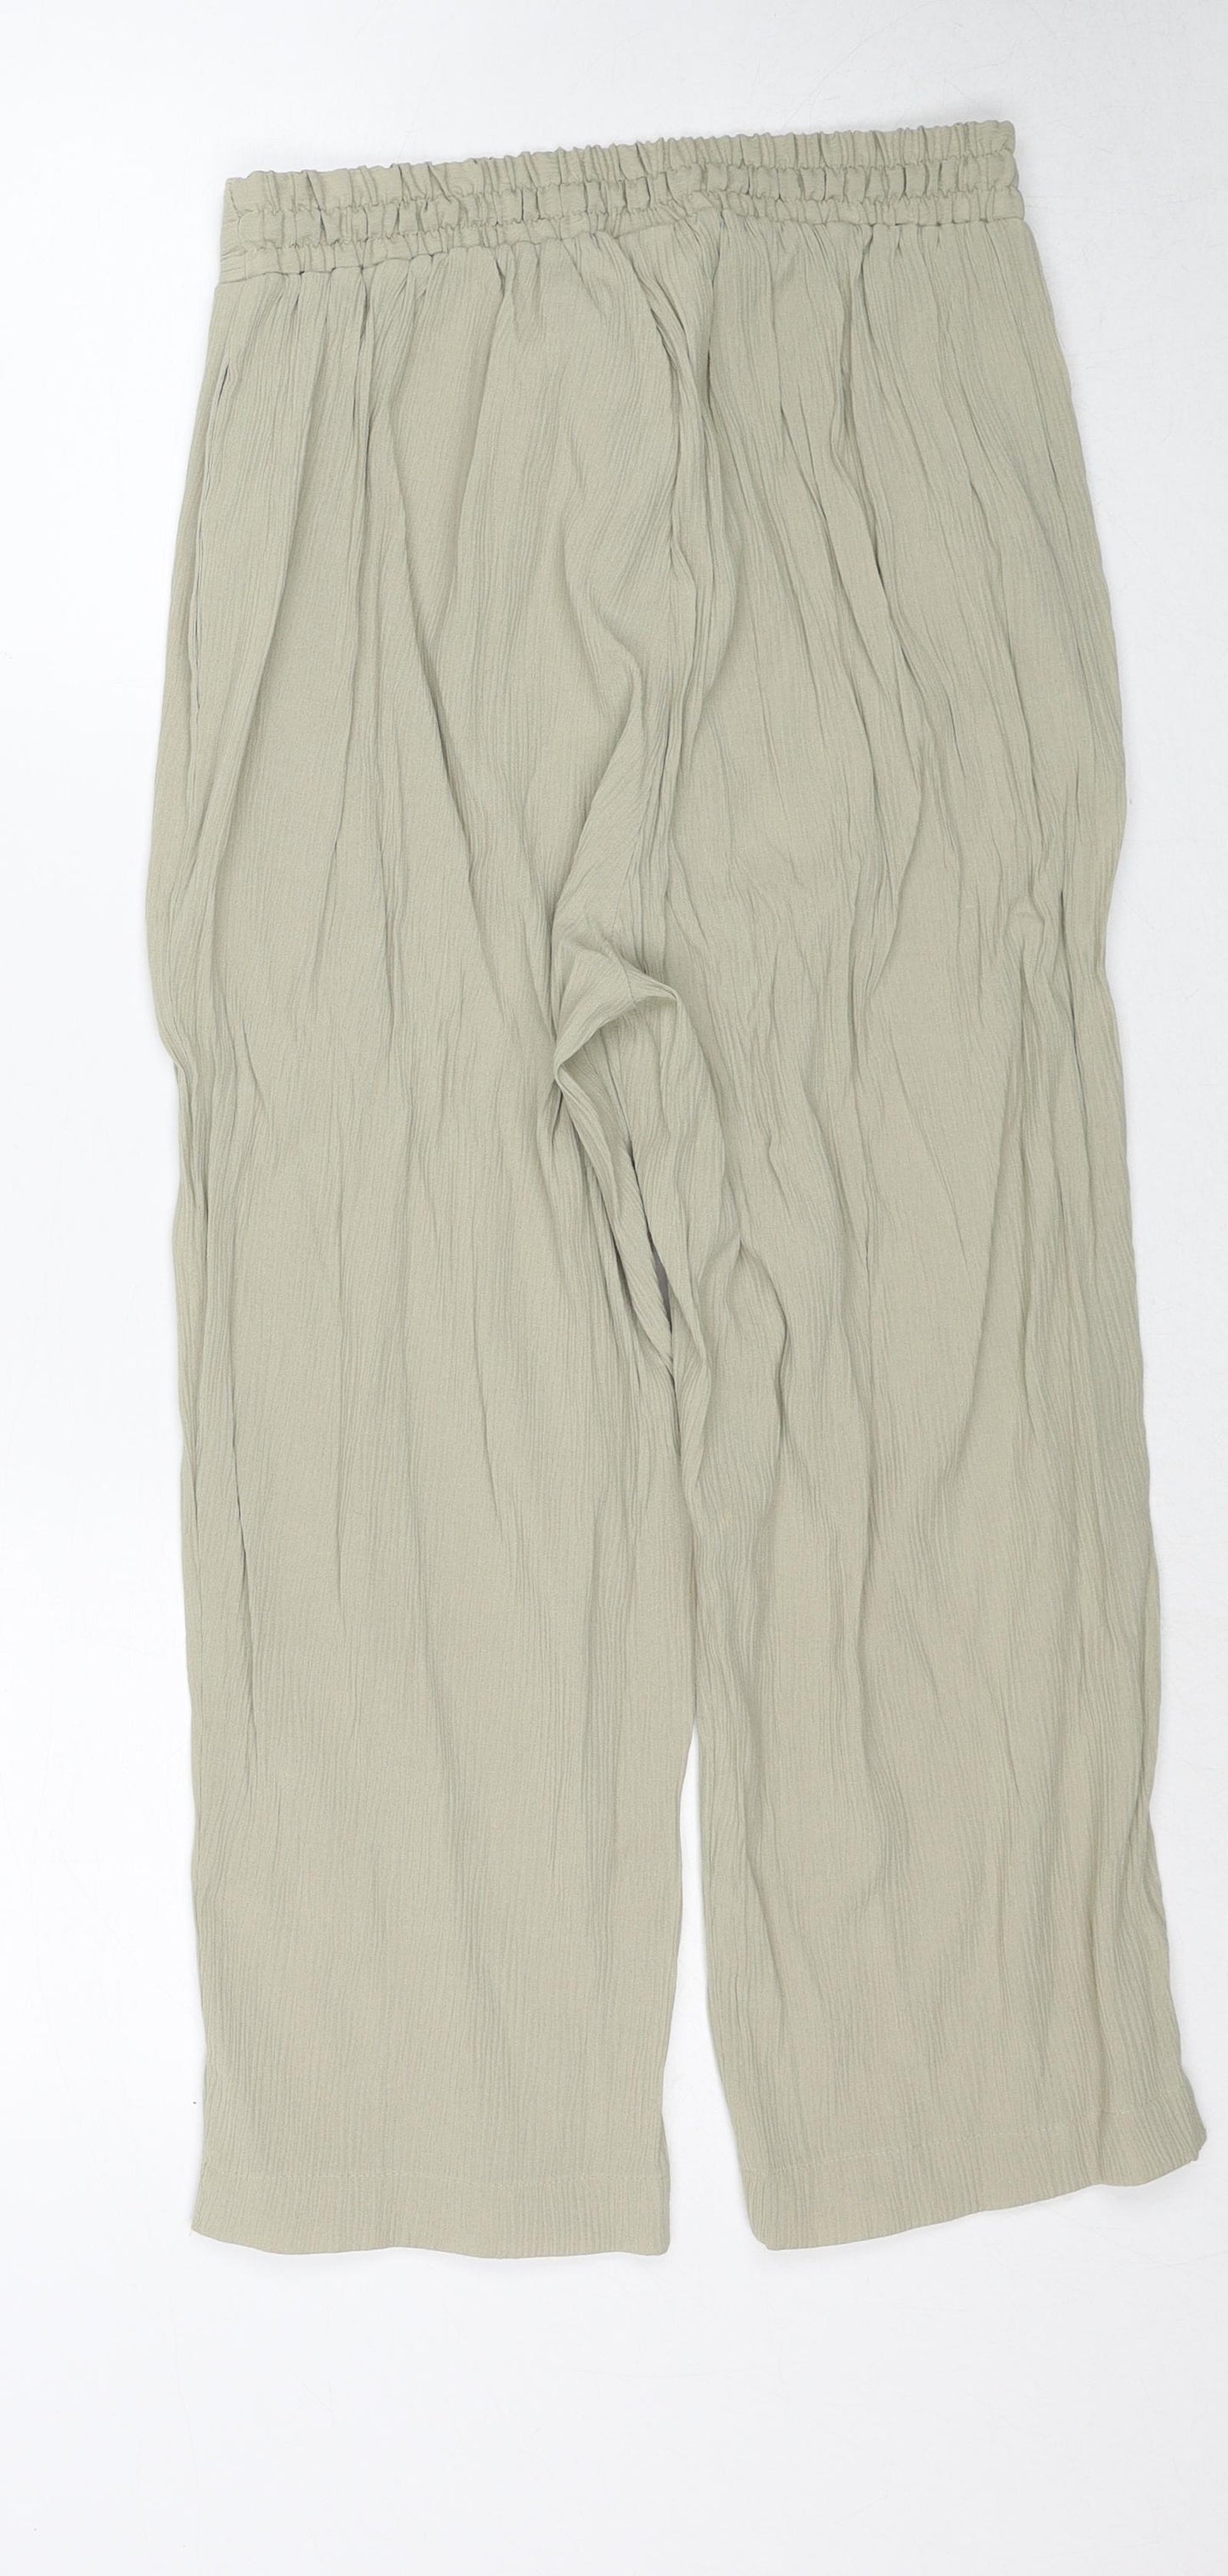 Damart Womens Beige Viscose Trousers Size 14 Regular Drawstring - Elastic Waist